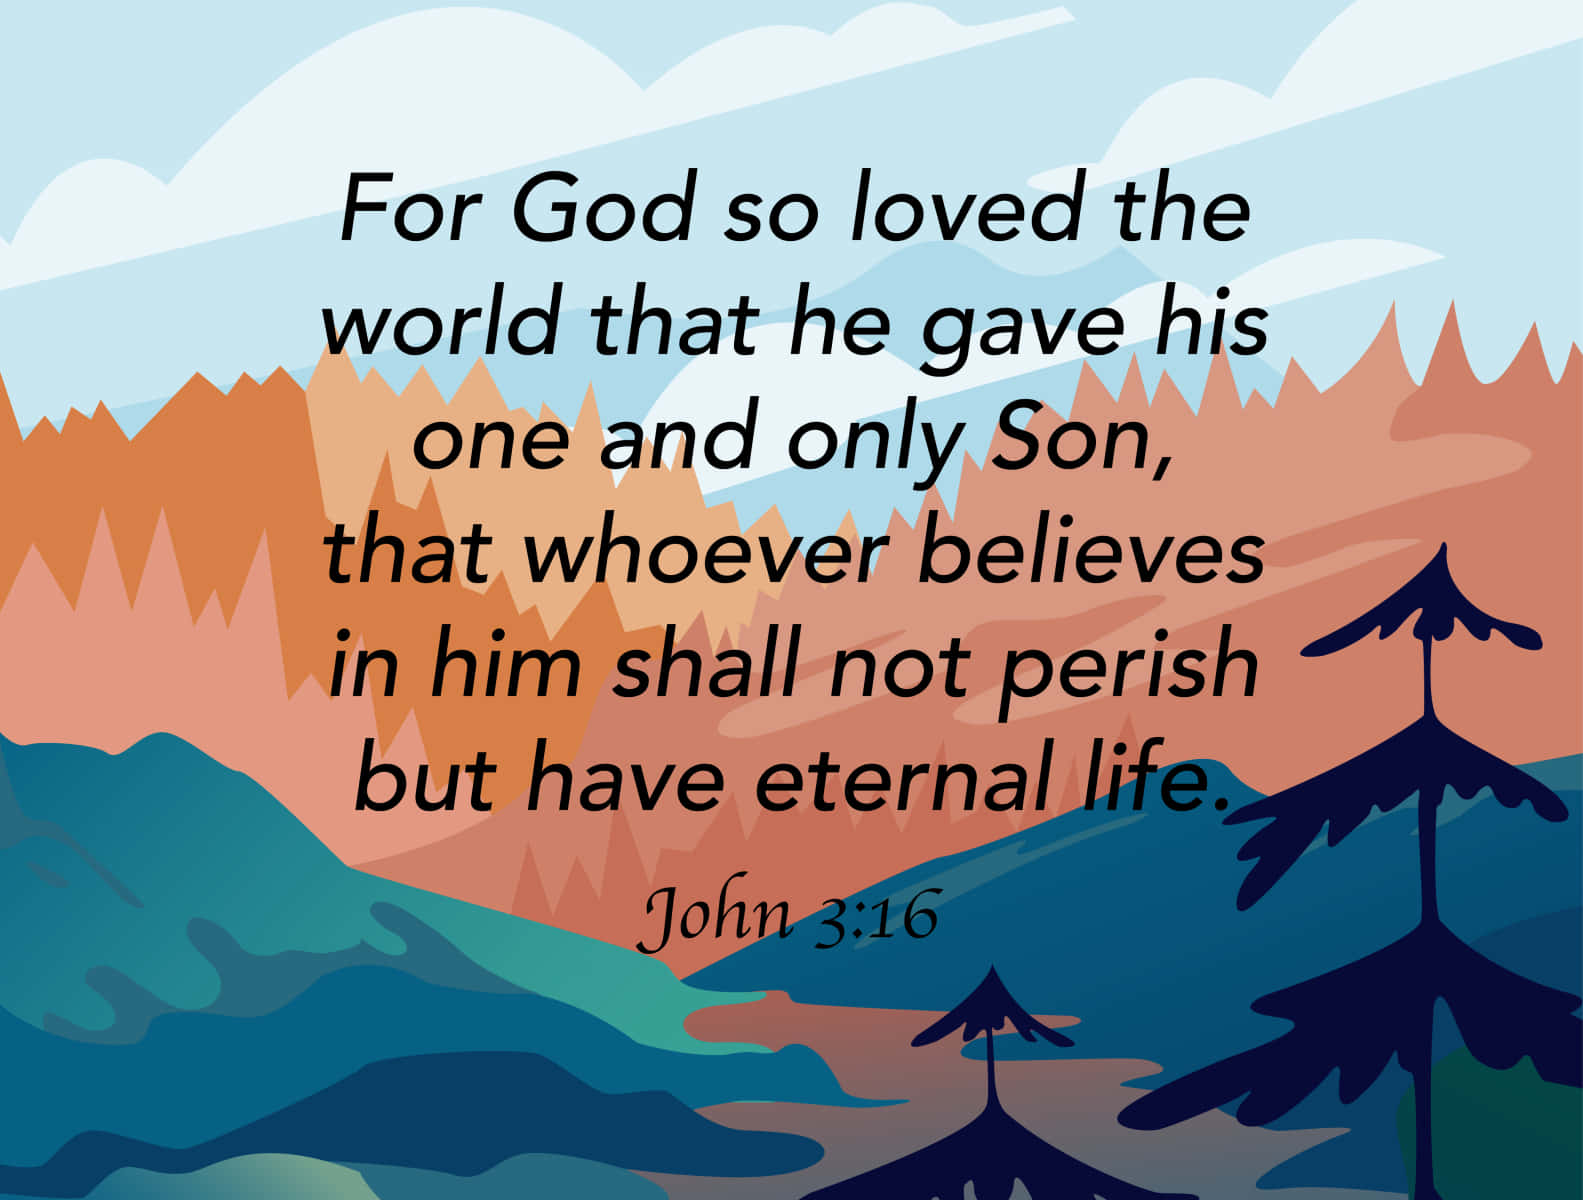 John316 Biblical Verse Illustration Wallpaper